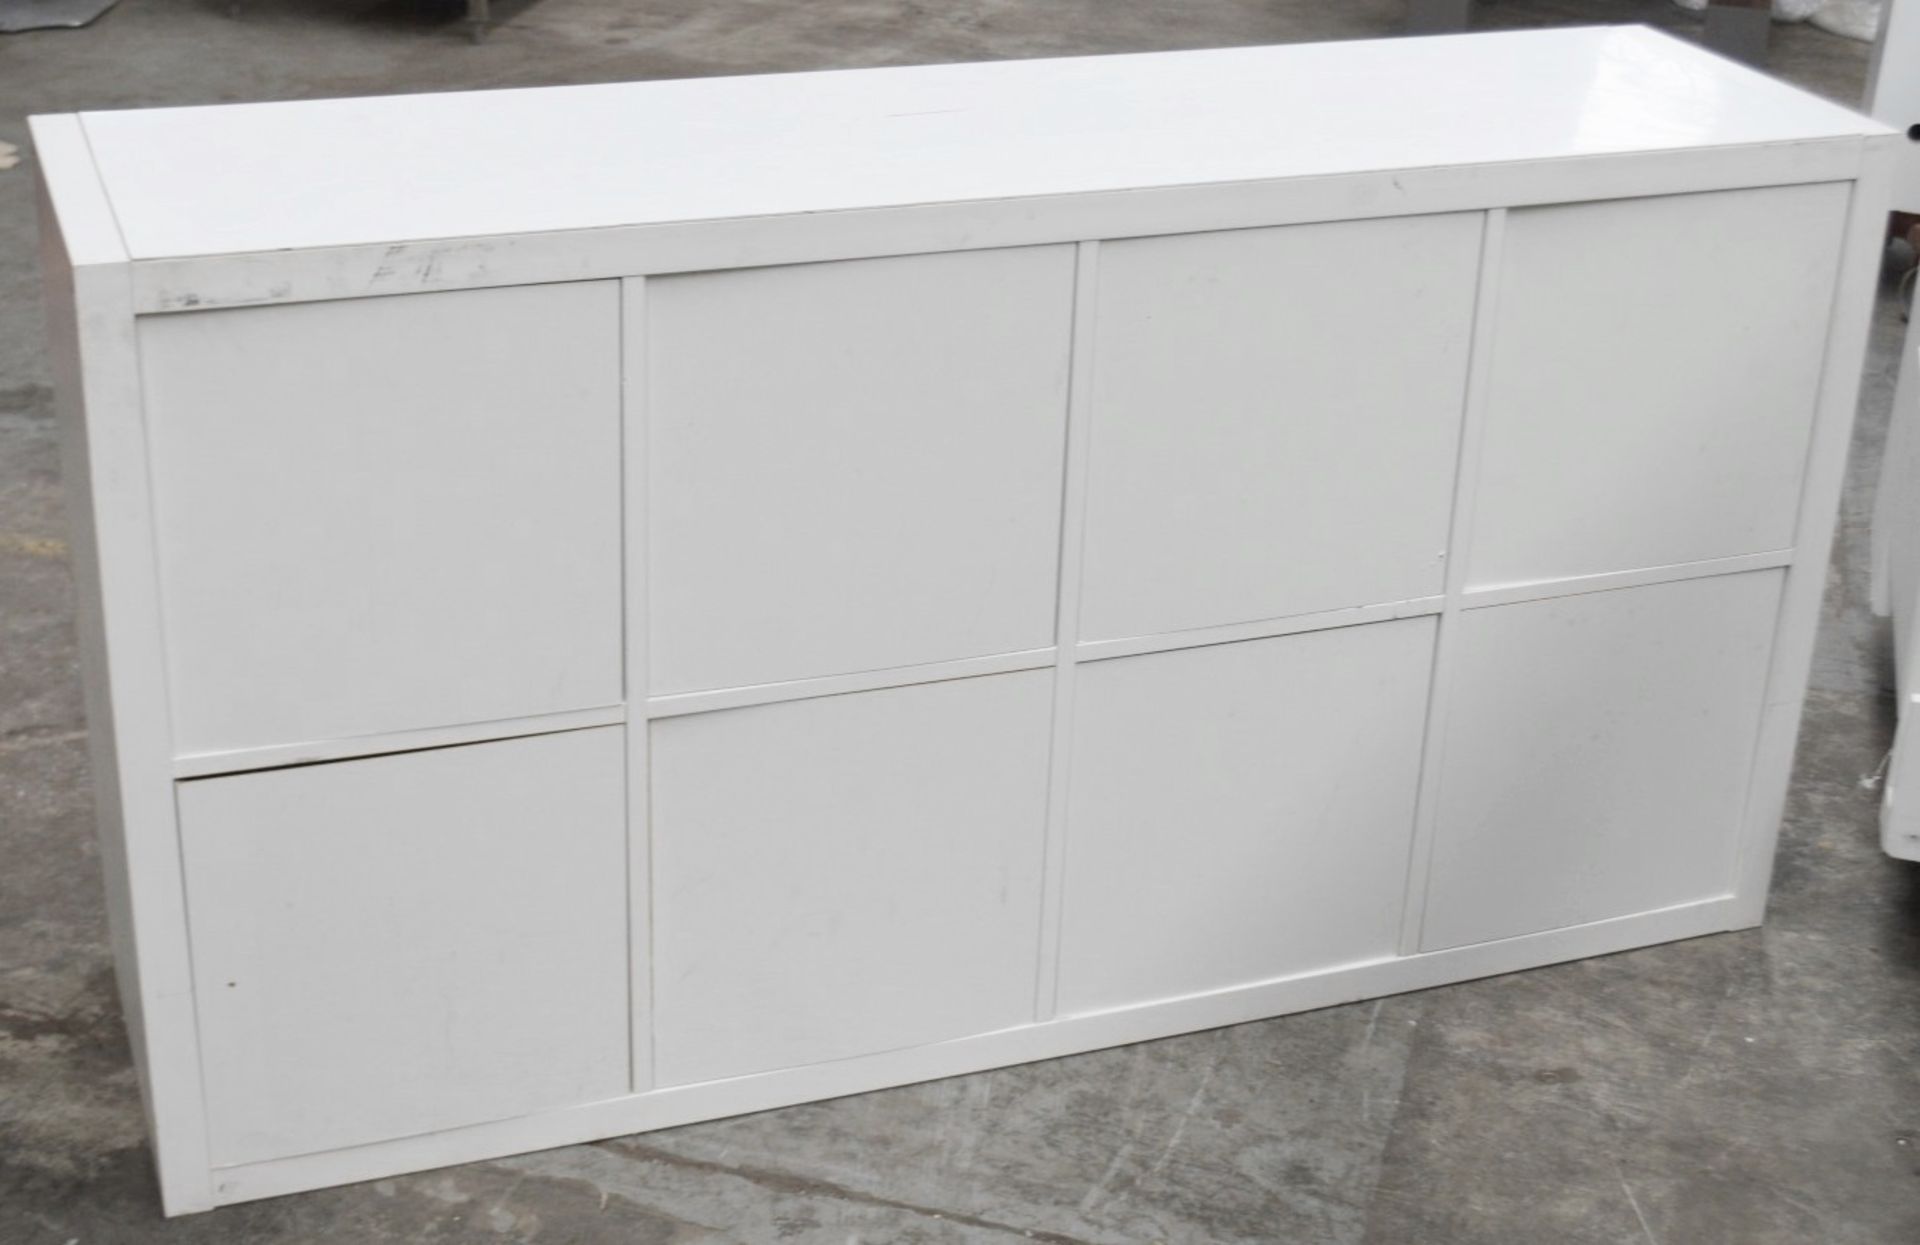 1 x 8-Door Salon Storage Unit In White - Dimensions: H77 x W146.5 x D38.7cm - Ref: MHB141 - - Image 2 of 3